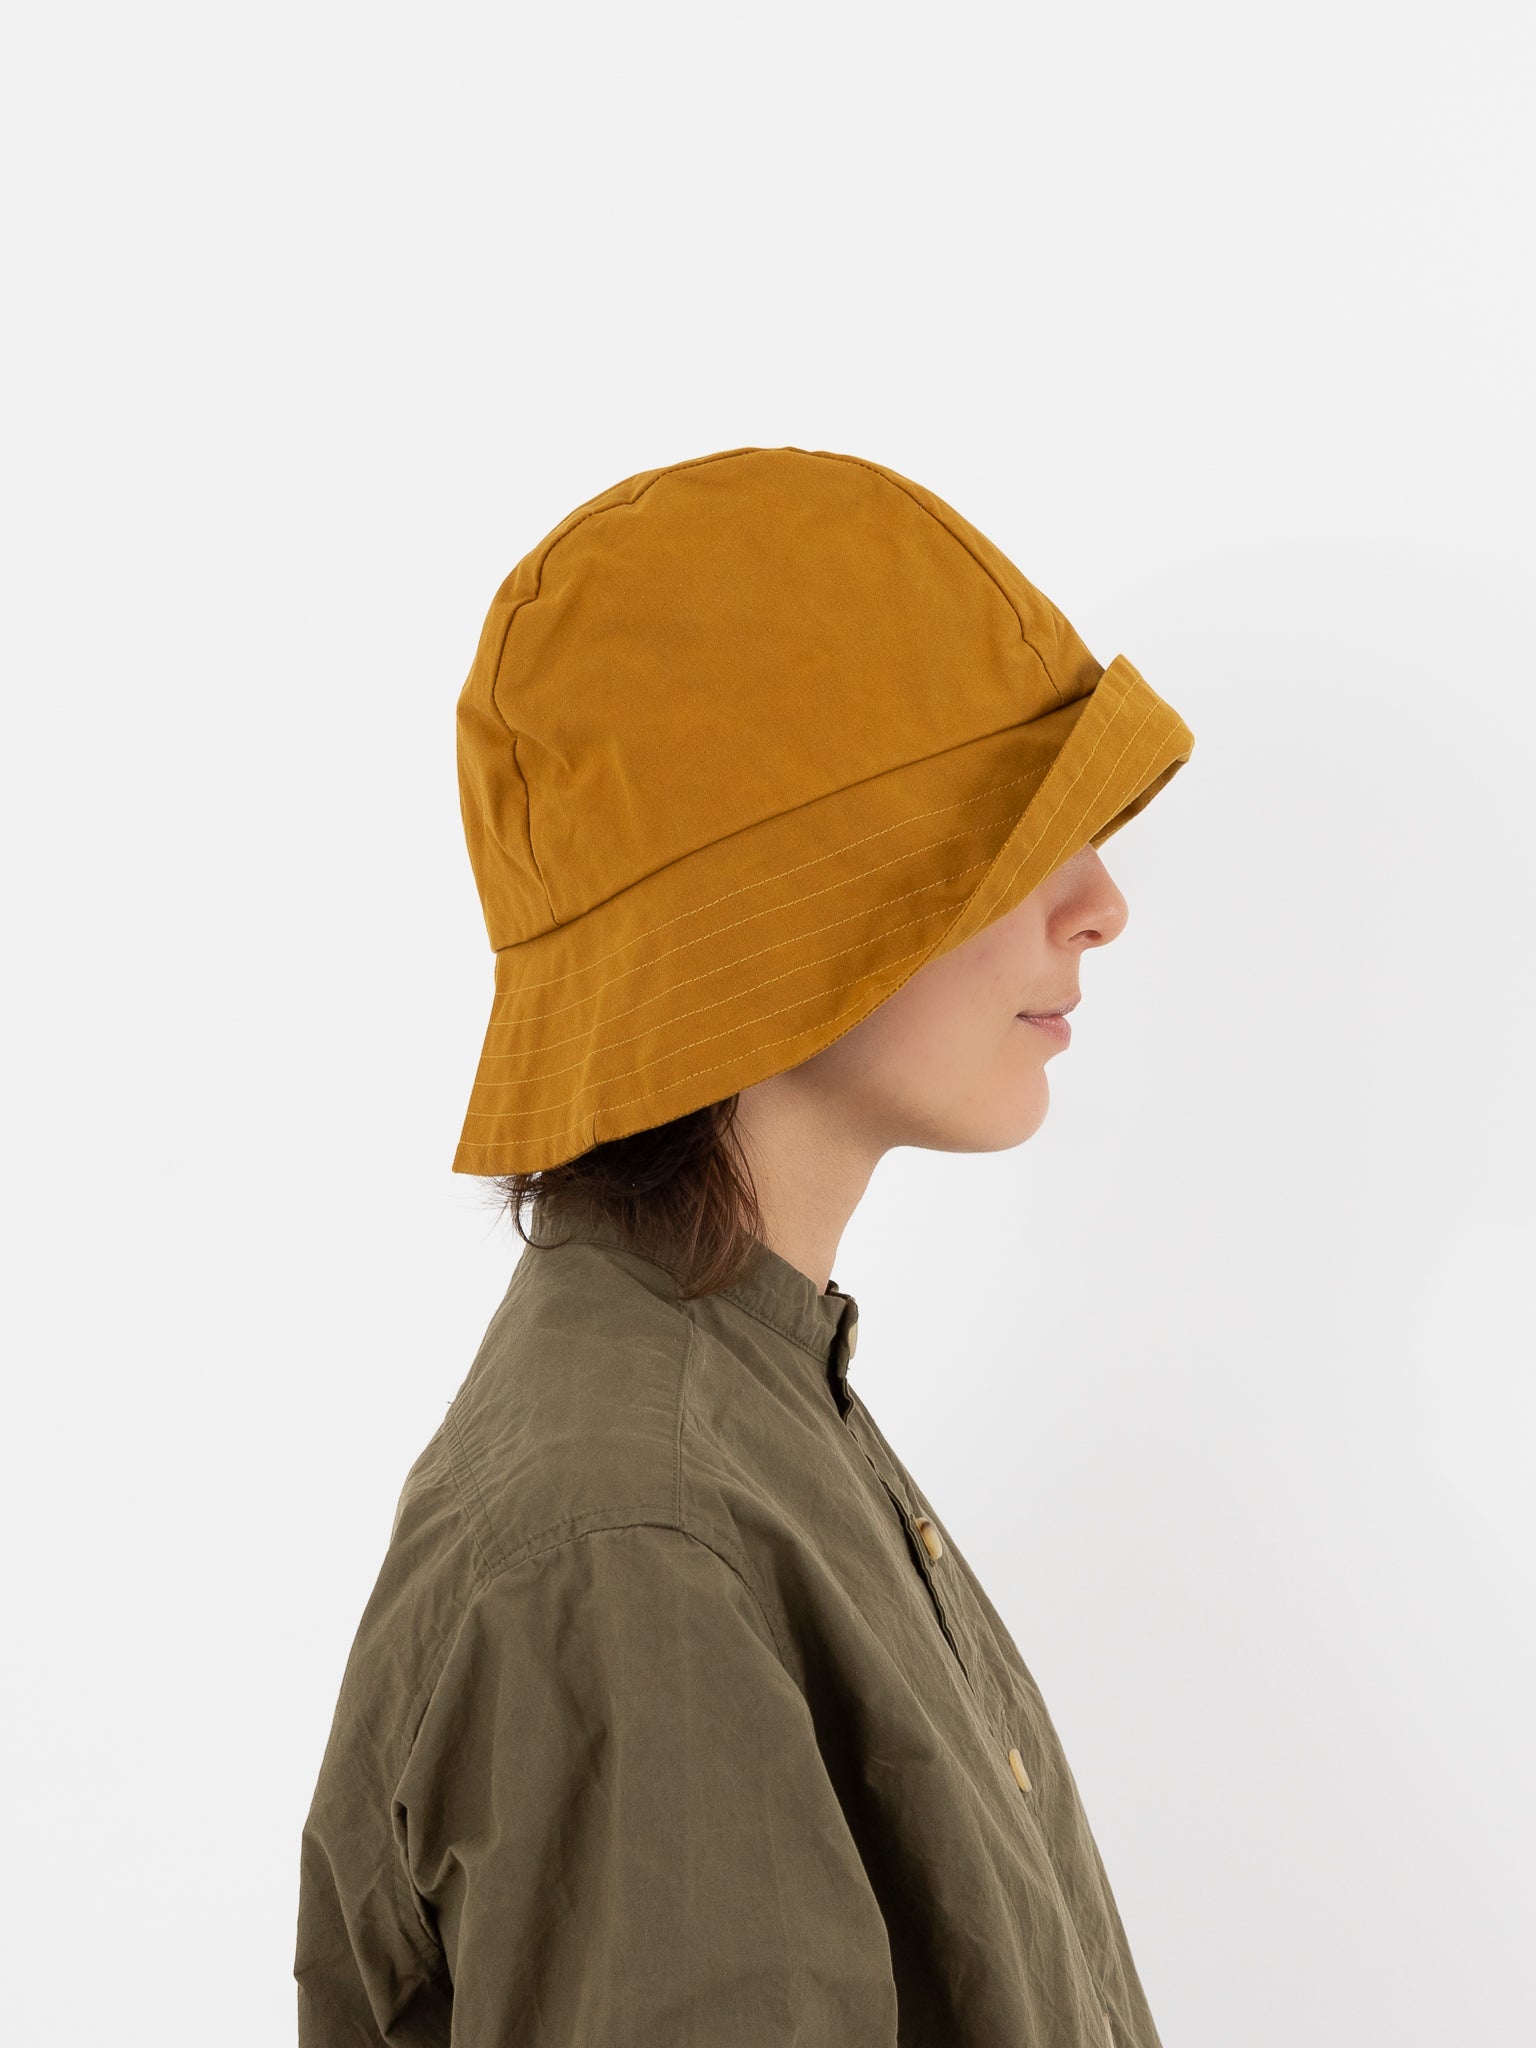 Studio Kettle Fisherman Hat, Mustard - Worthwhile